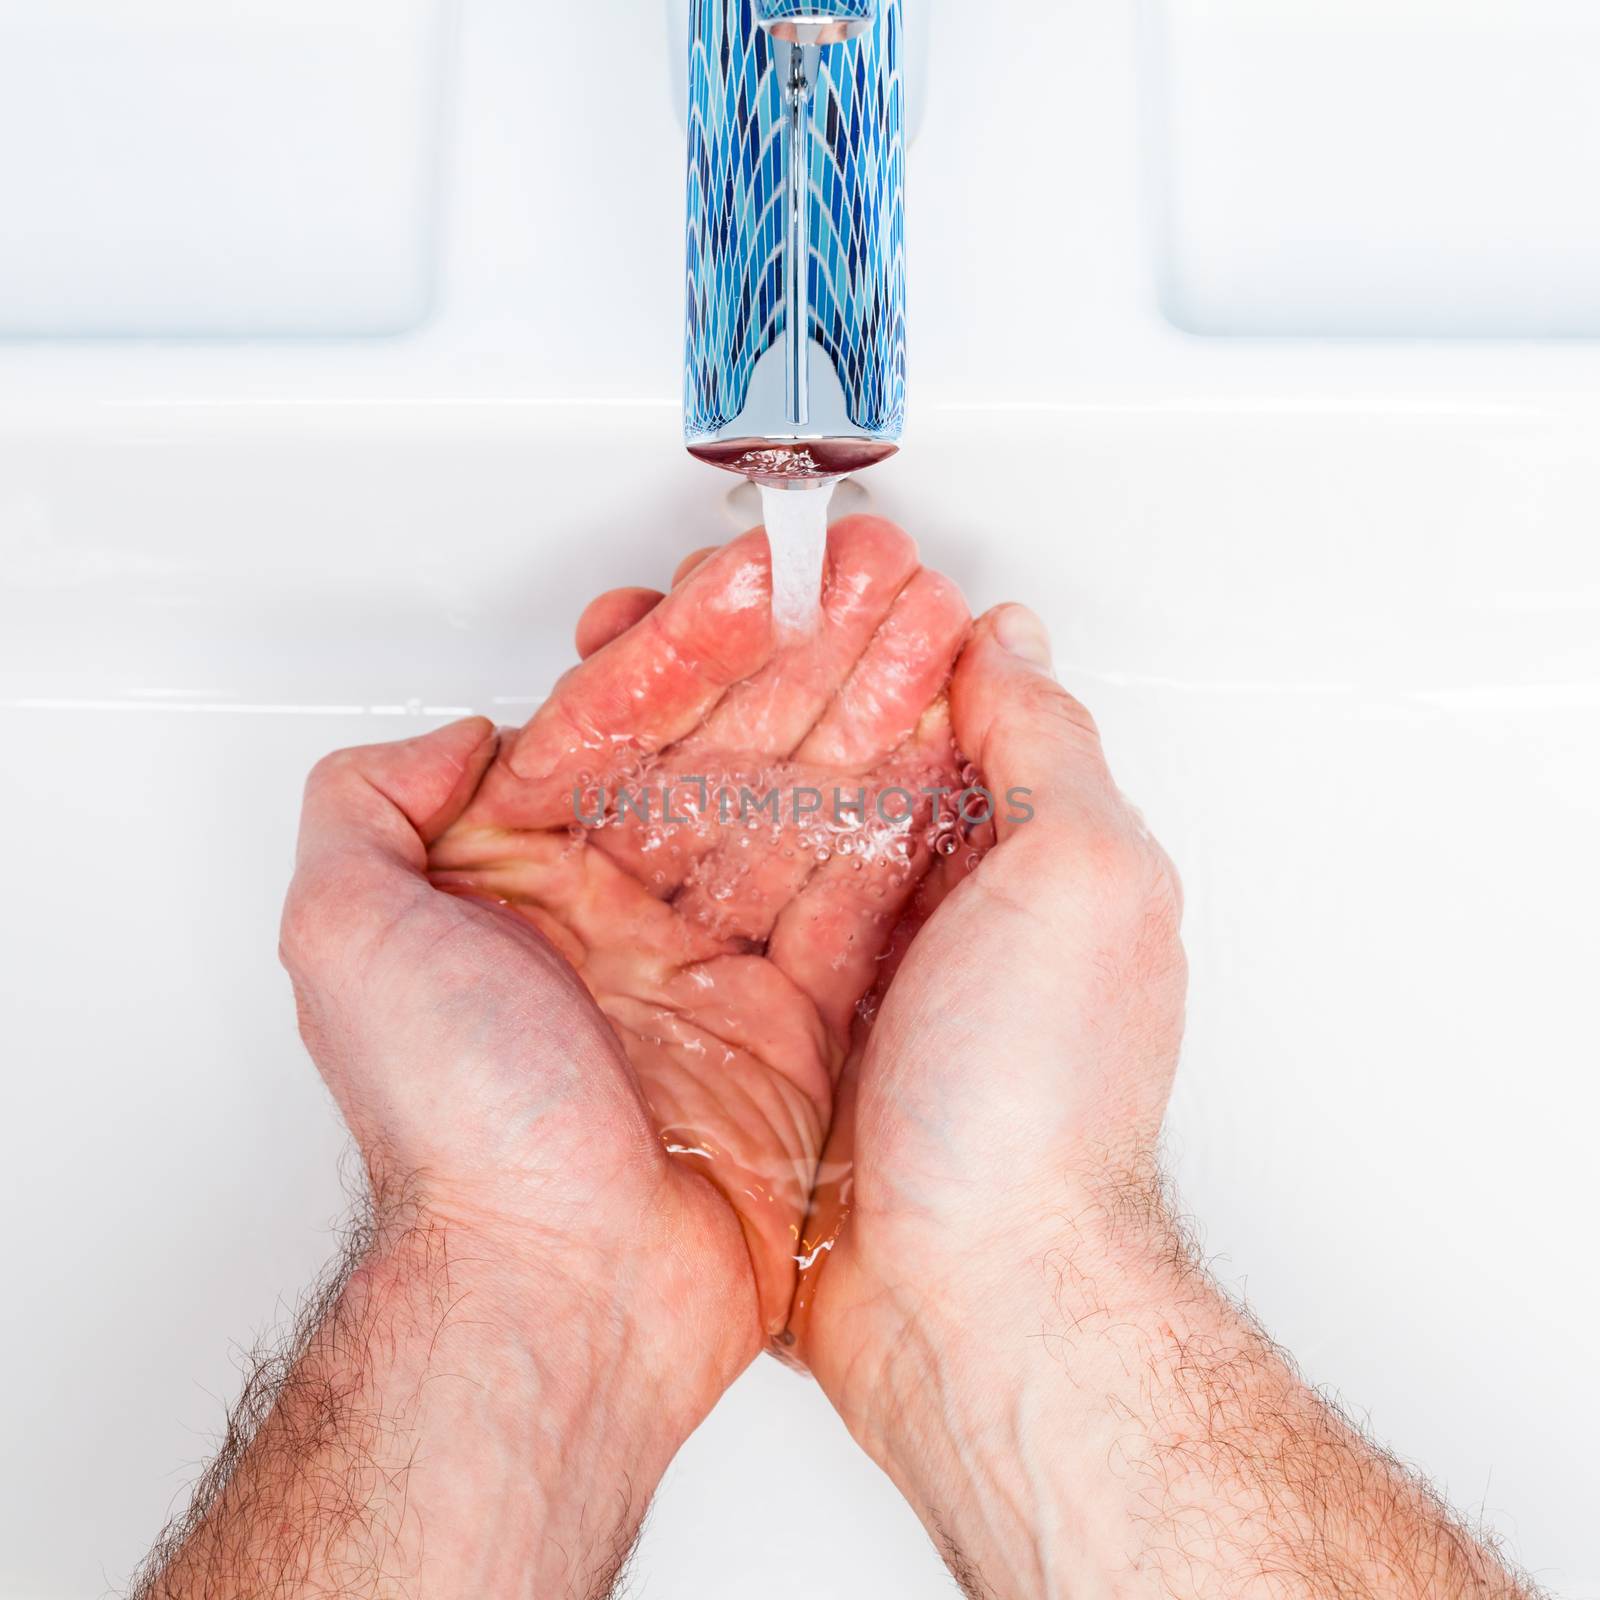 Man washing his hands in a bathroom sink